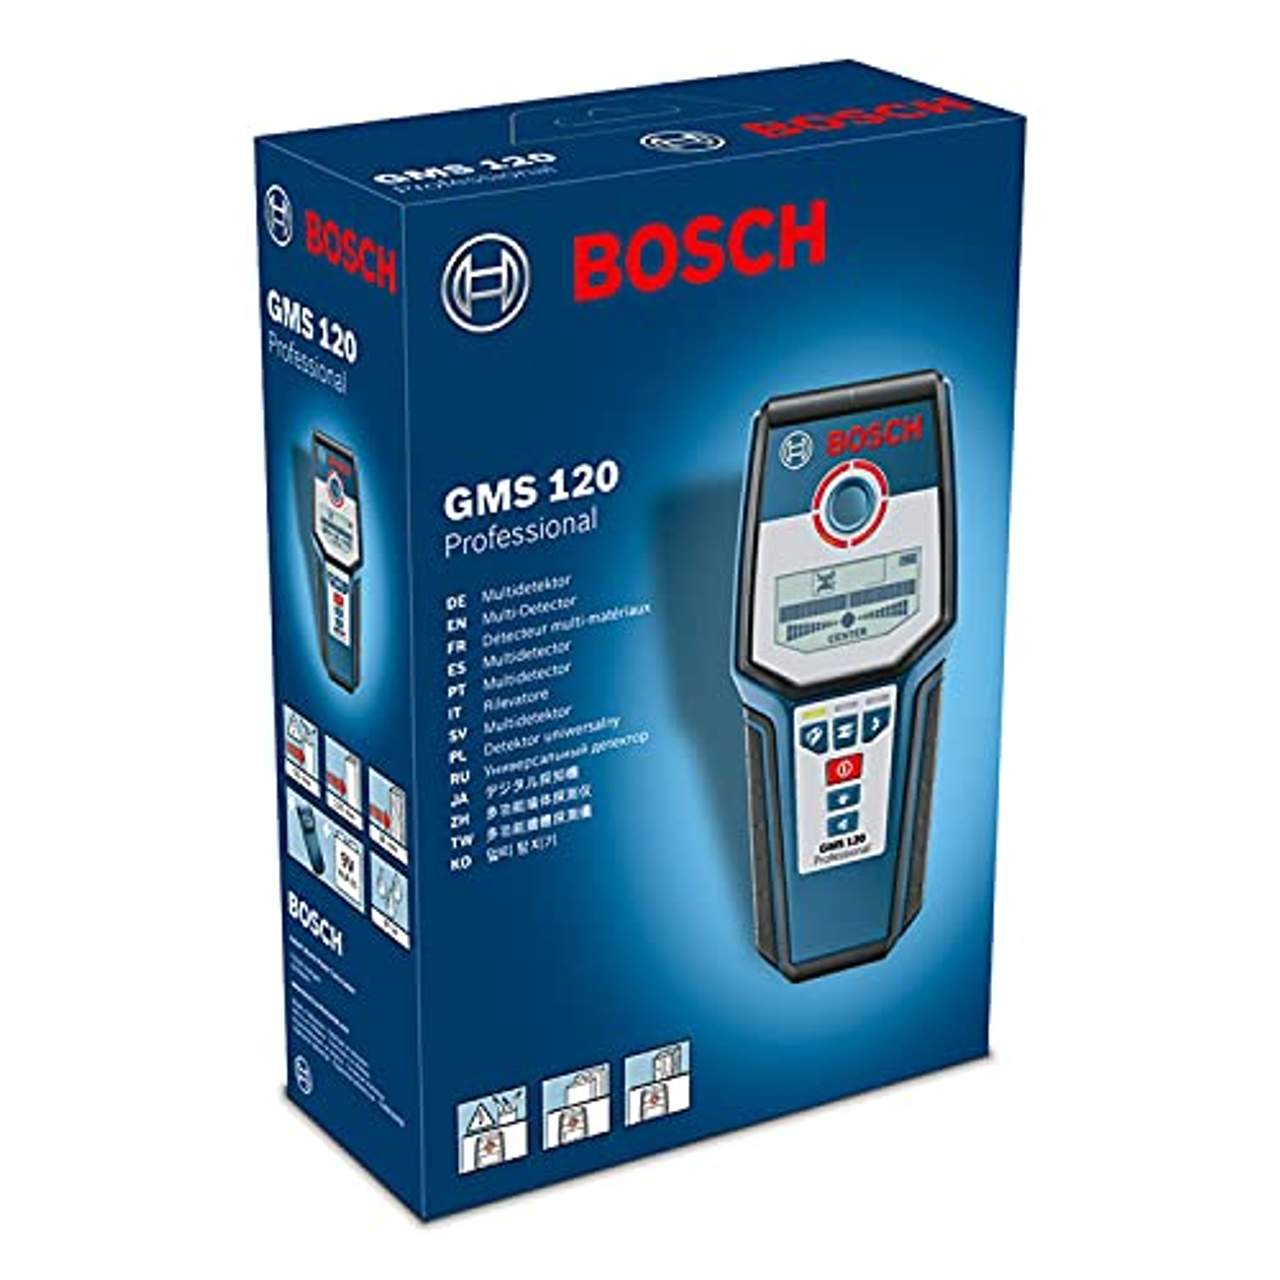 Bosch Professional GMS 120